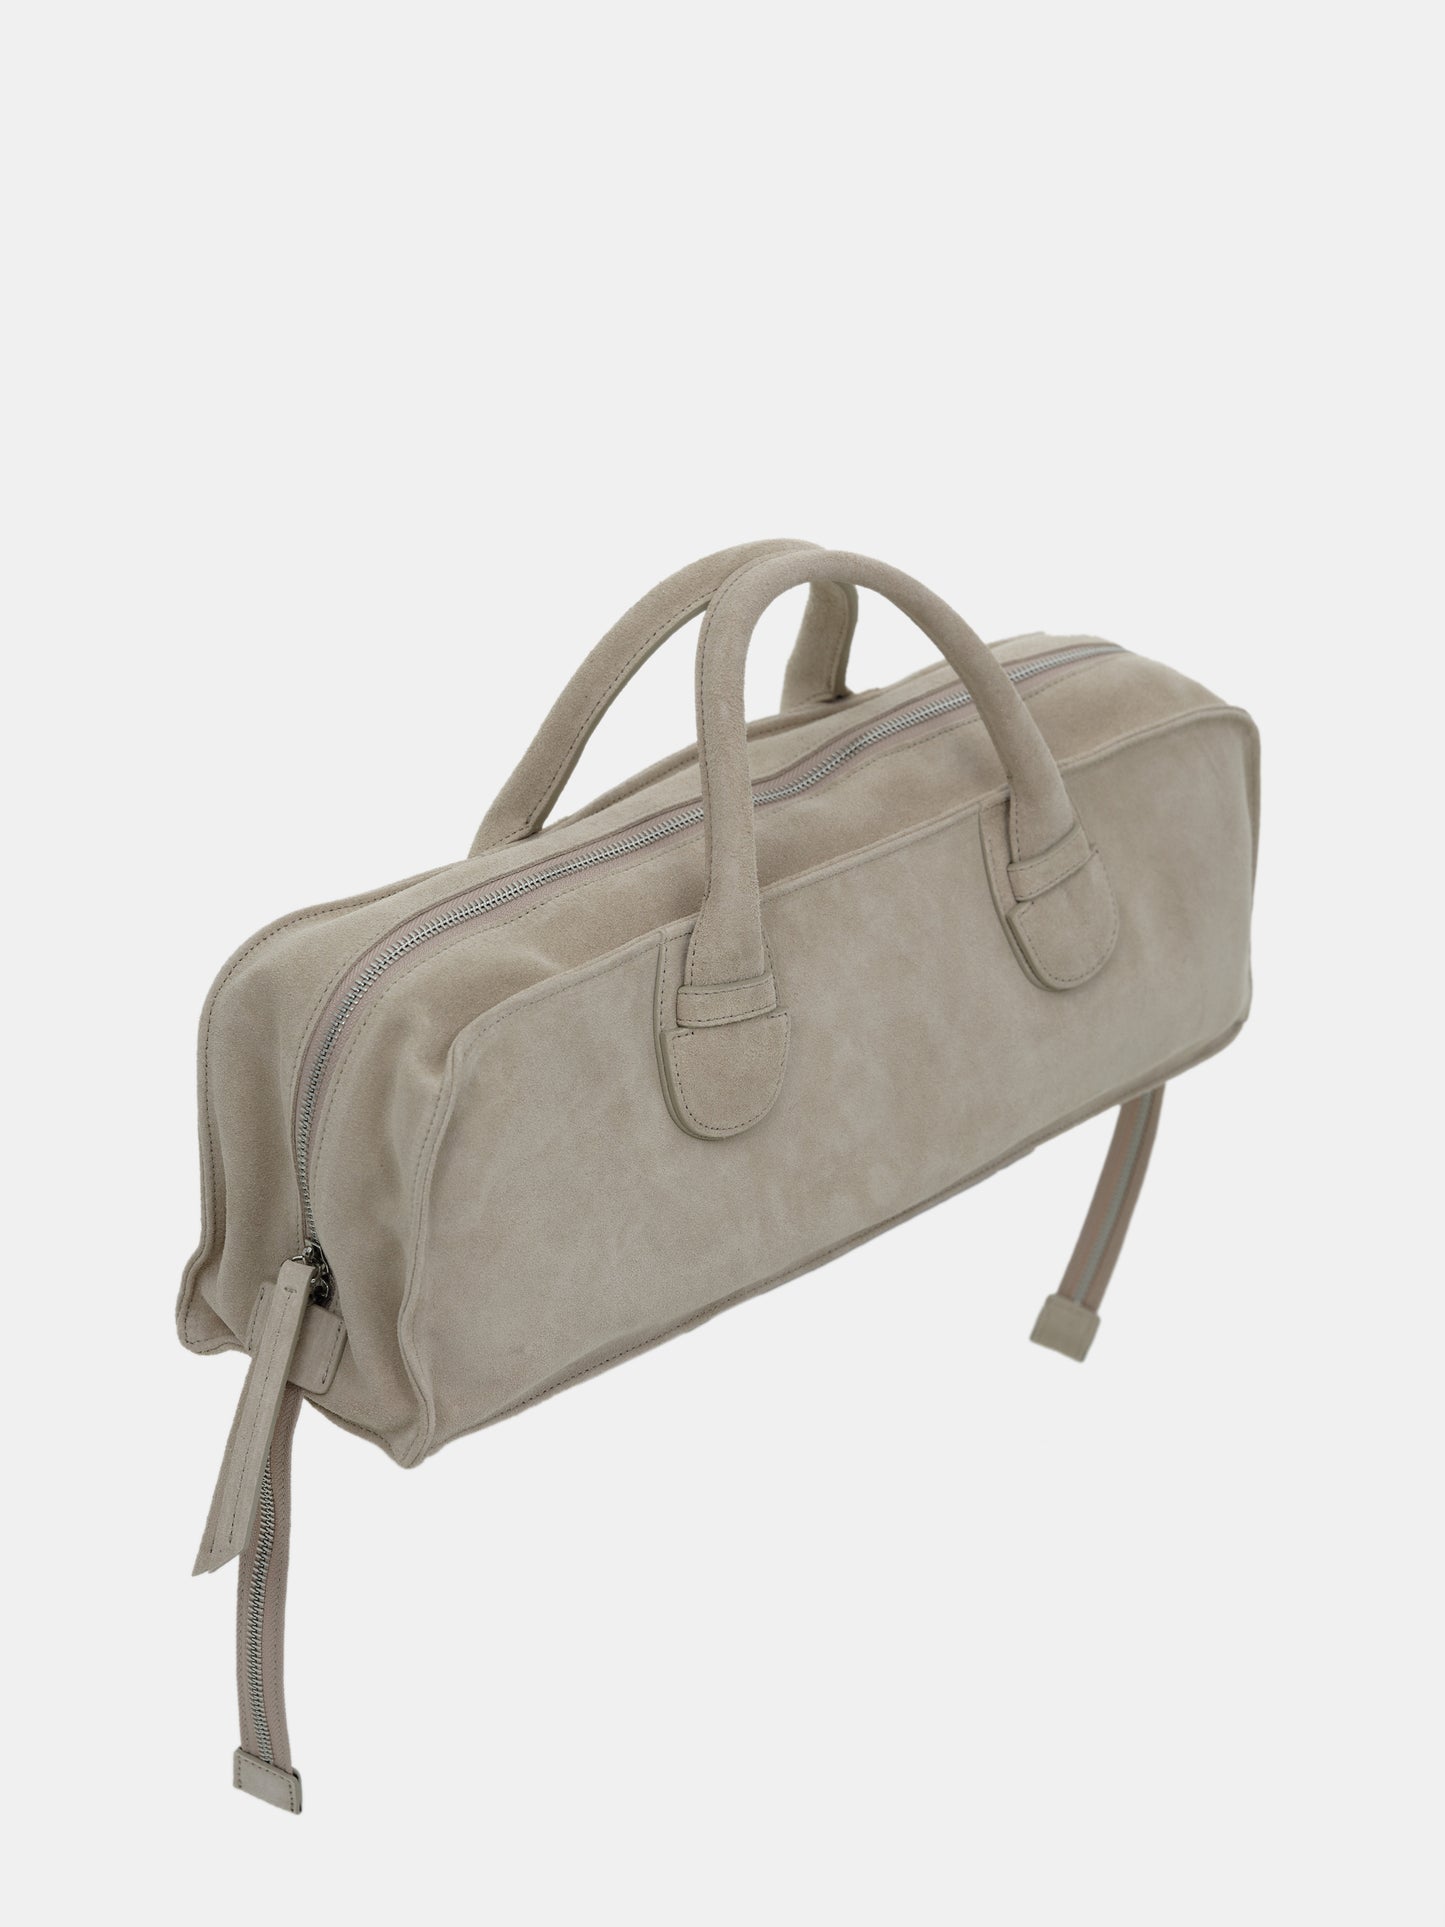 Leather Suede Rectangular Handbag, Sand